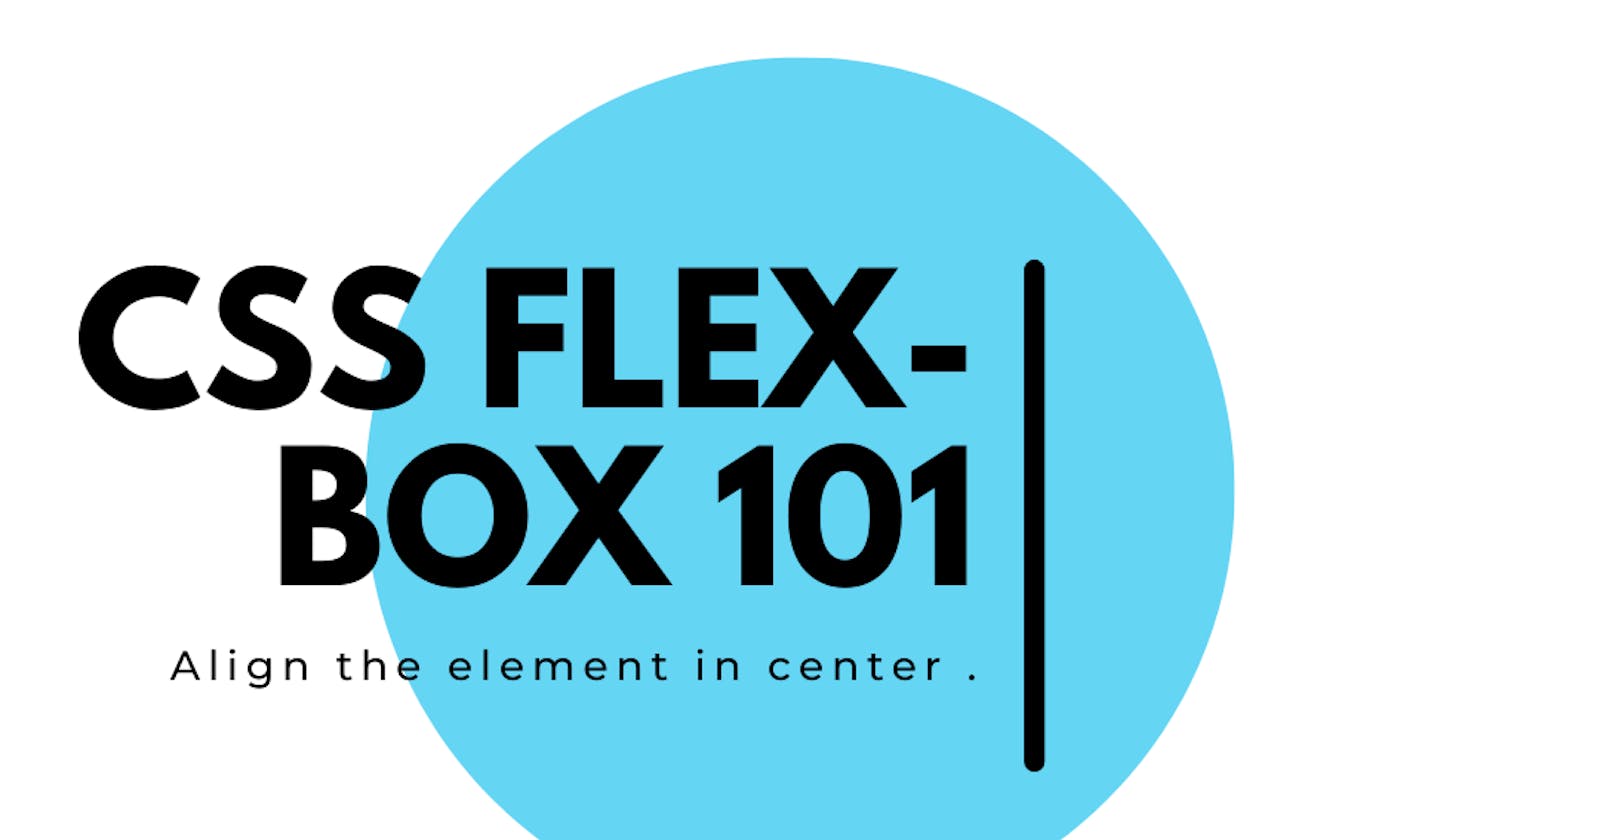 CSS Flexbox 101